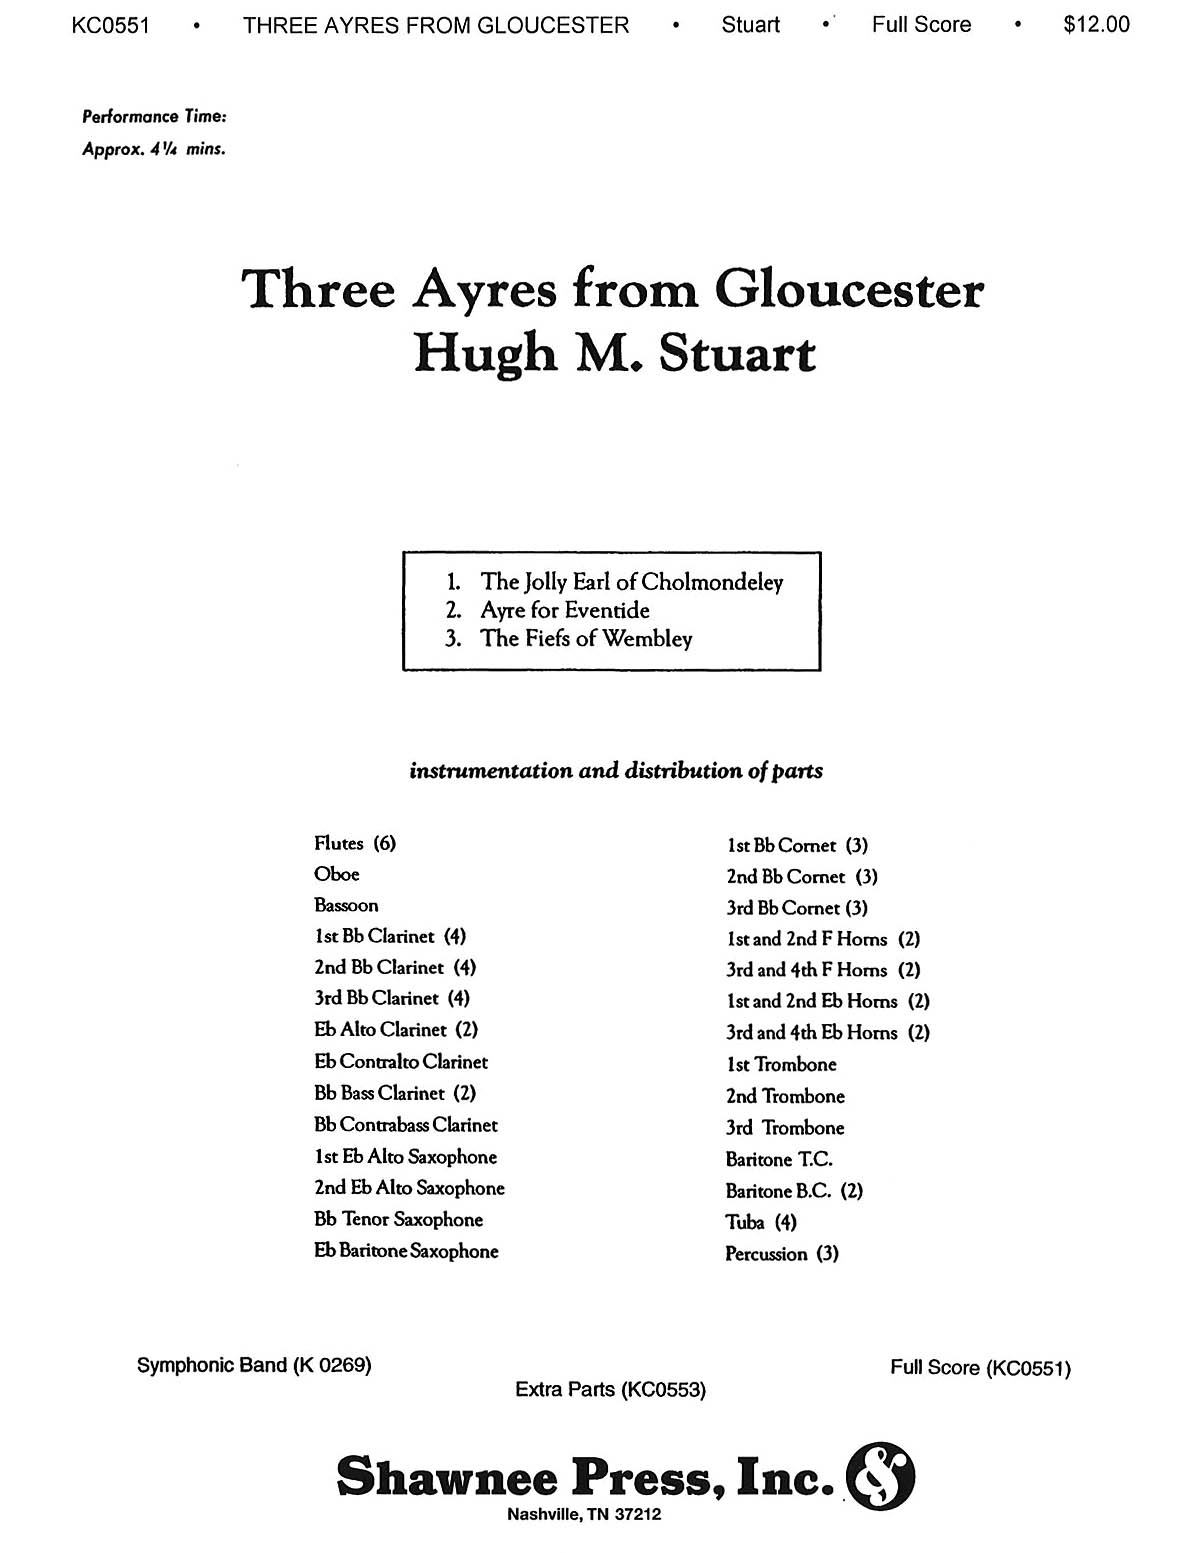 Hugh M. Stuart: Three Ayres from Gloucester: Concert Band: Score